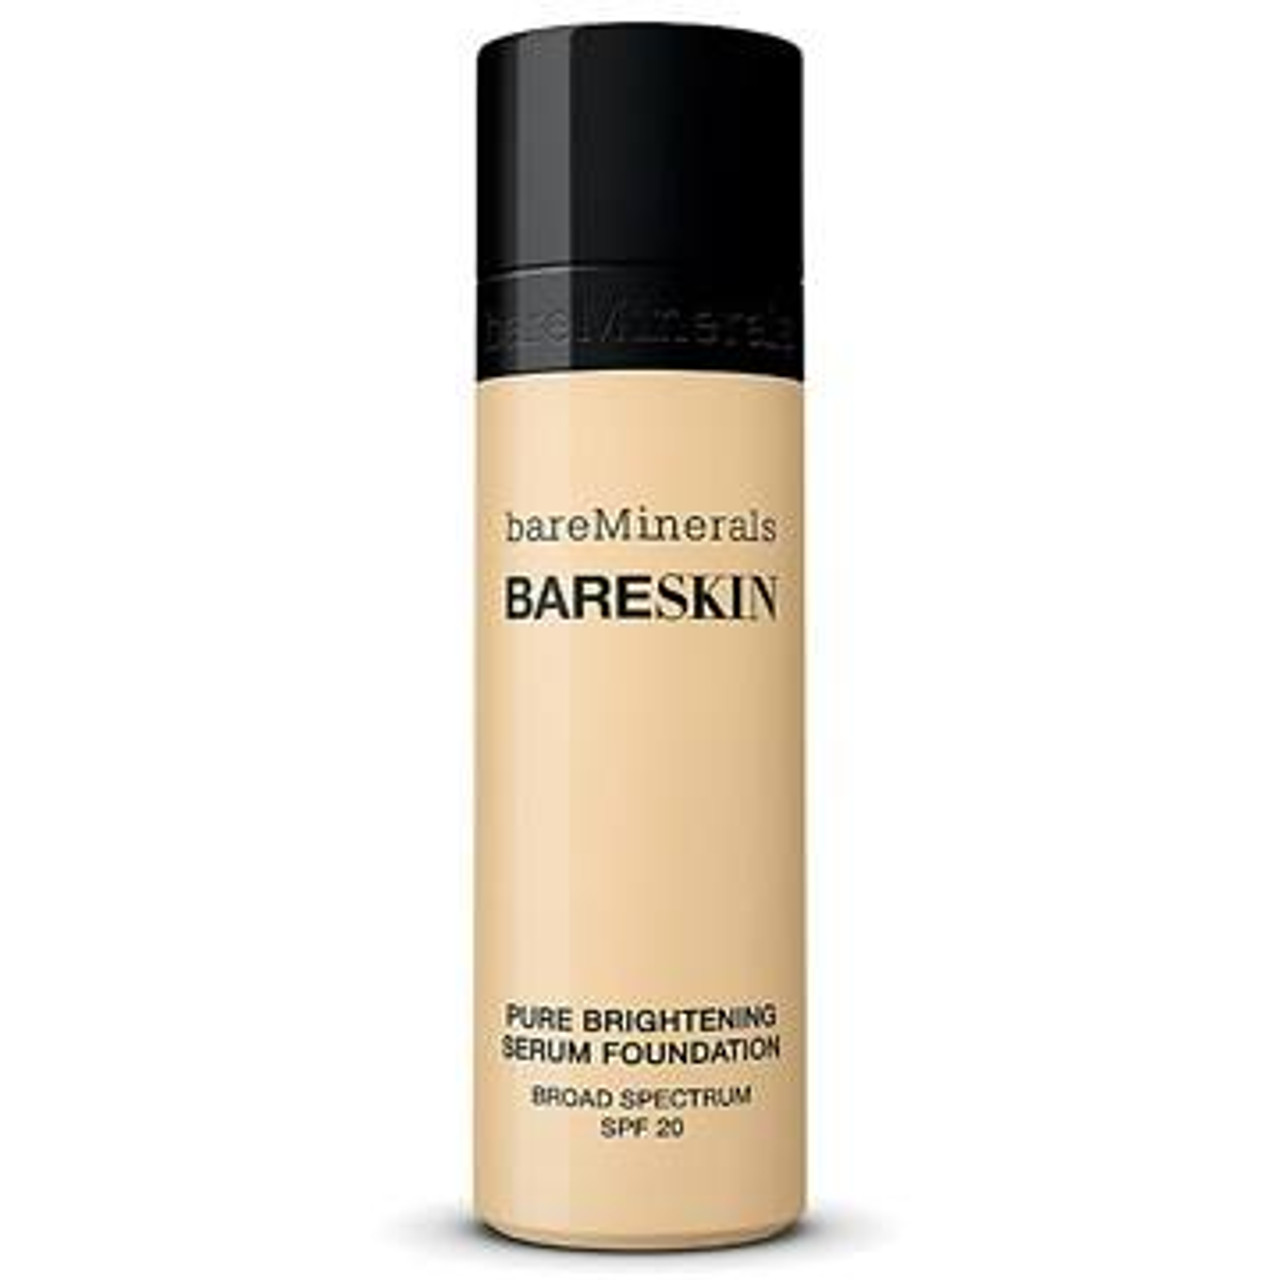 BareMinerals BareSkin Pure Brightening Serum Foundation SPF 20 - 1 oz - Bare Cream 05 (70721)